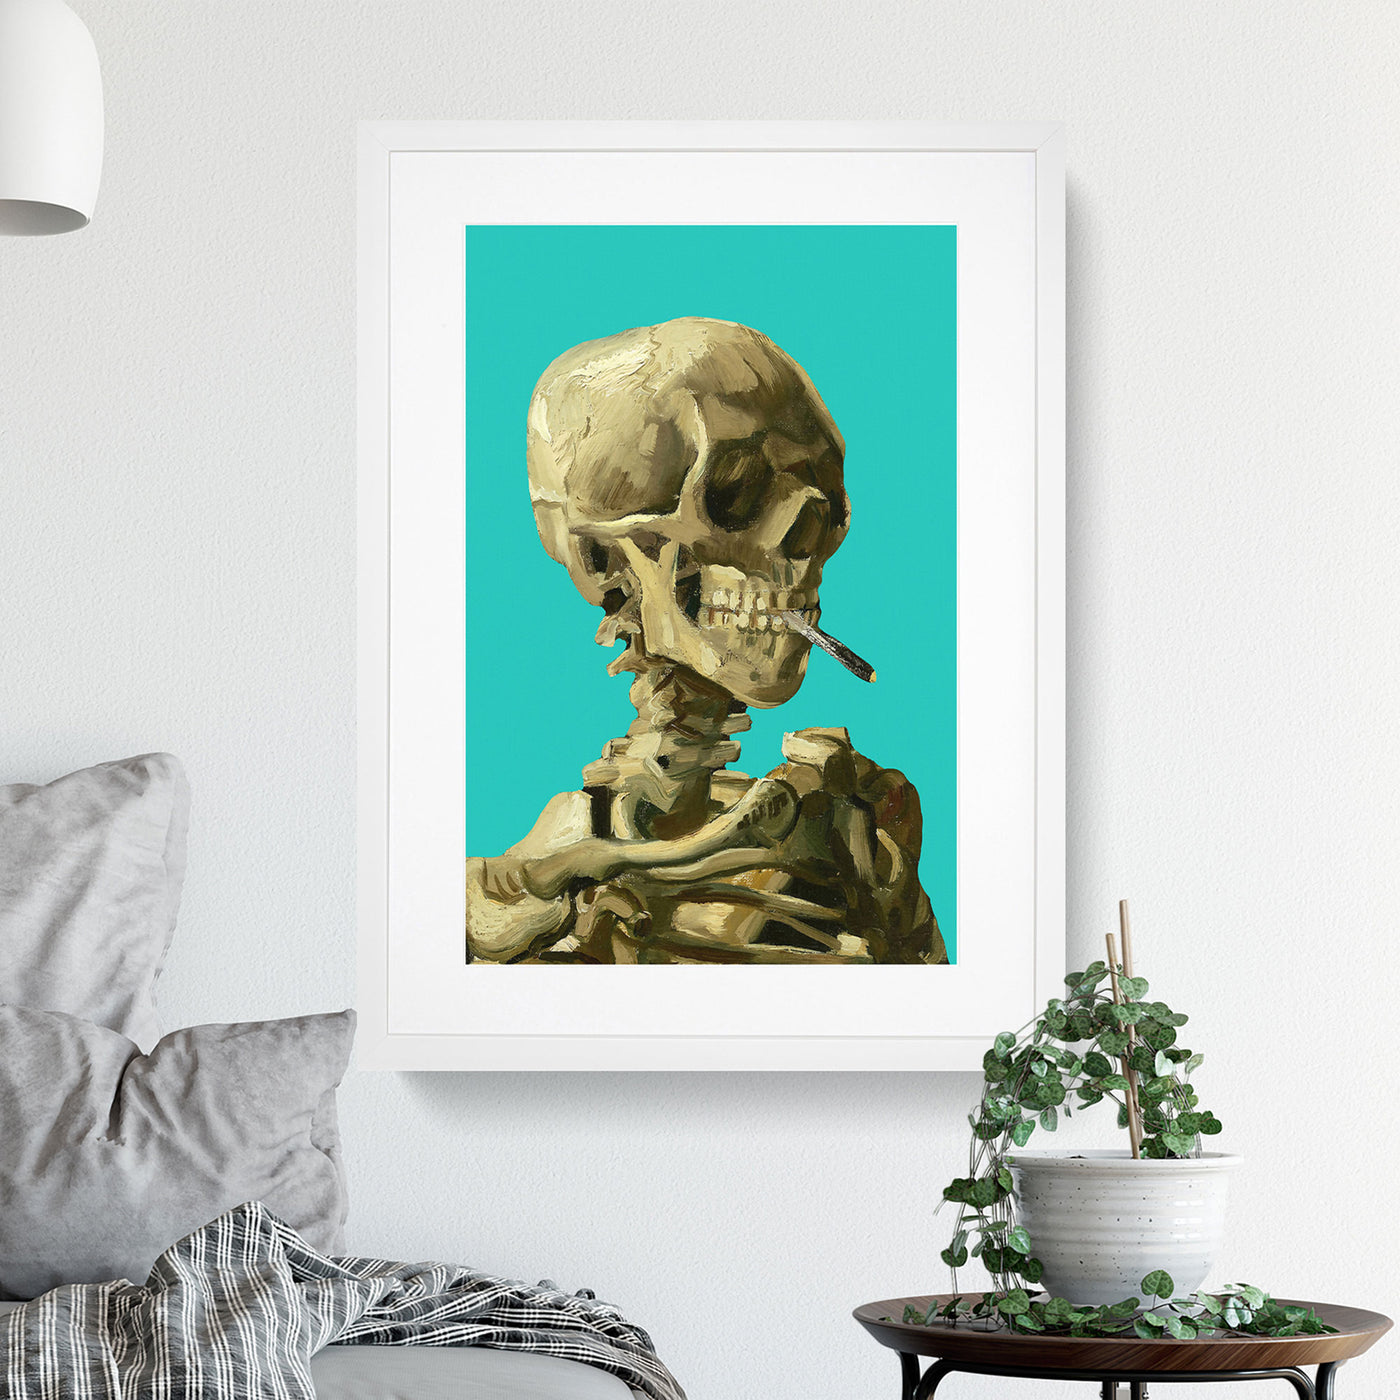 Teal Skull of a Skeleton with Cigarette By Vincent Van Gogh